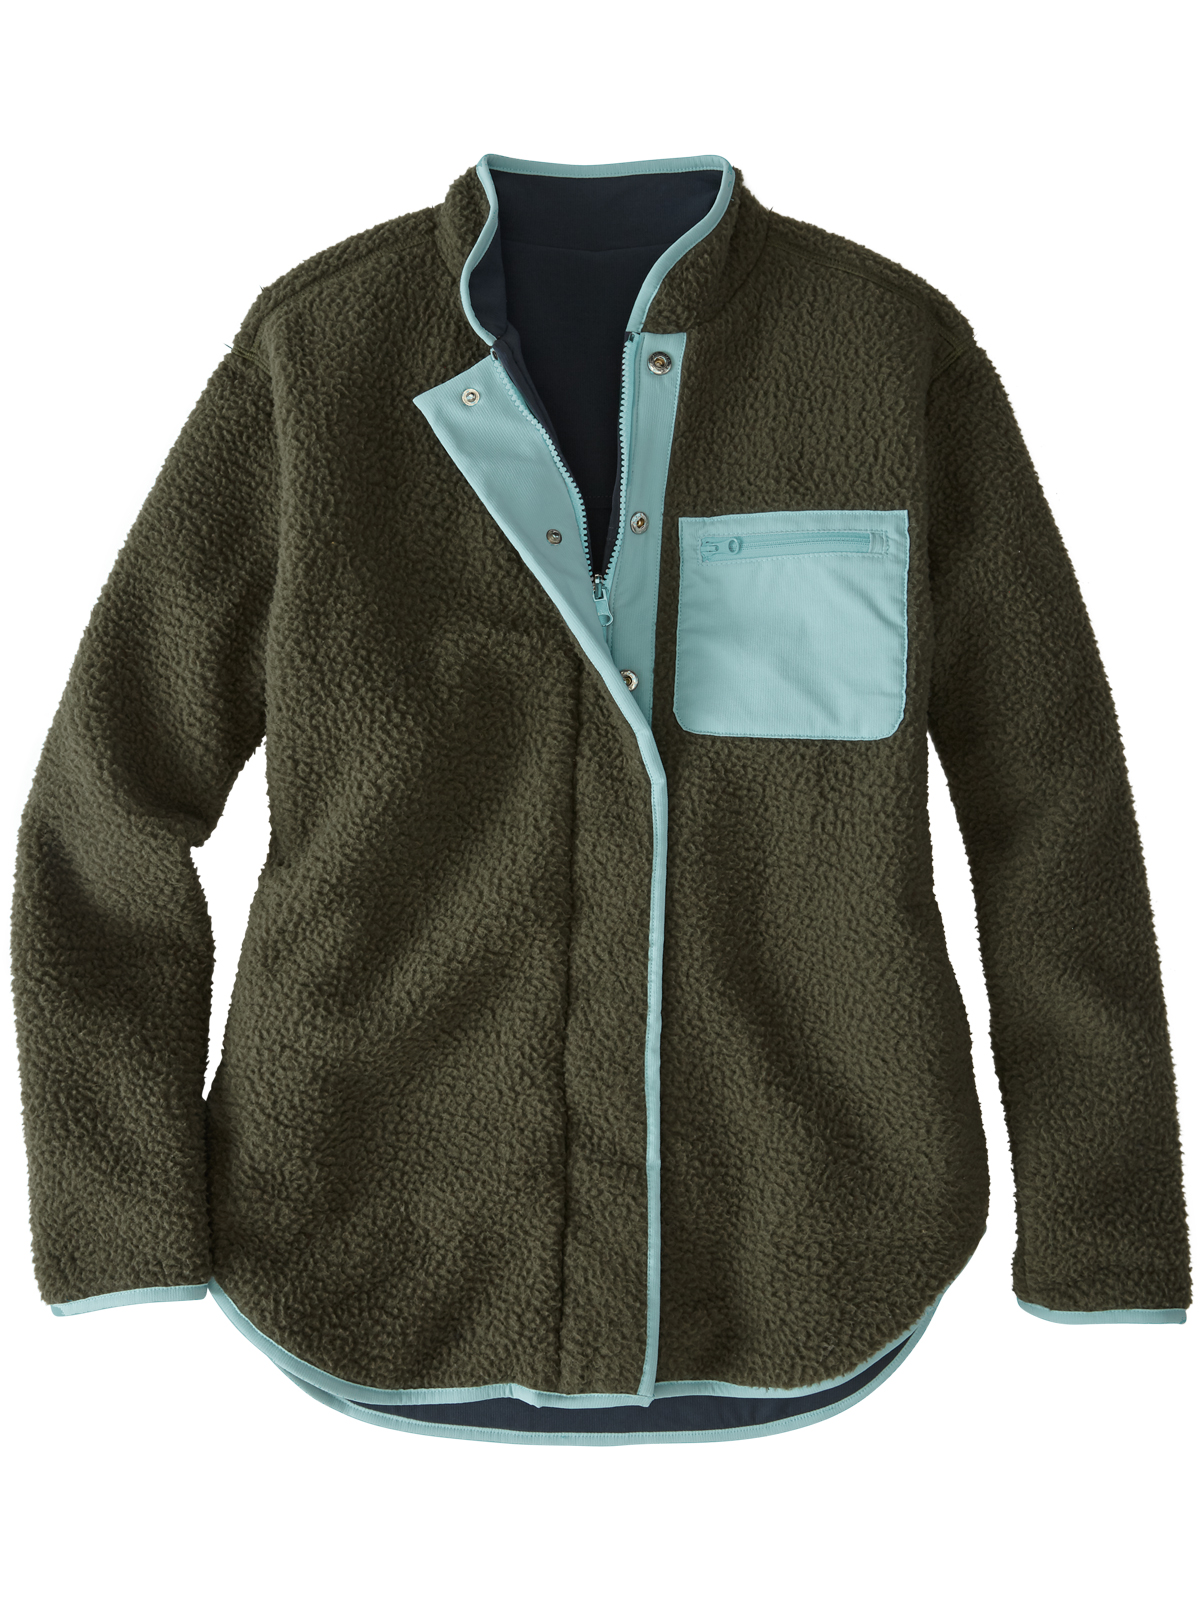 Women's Fleece Jacket: Annapurna